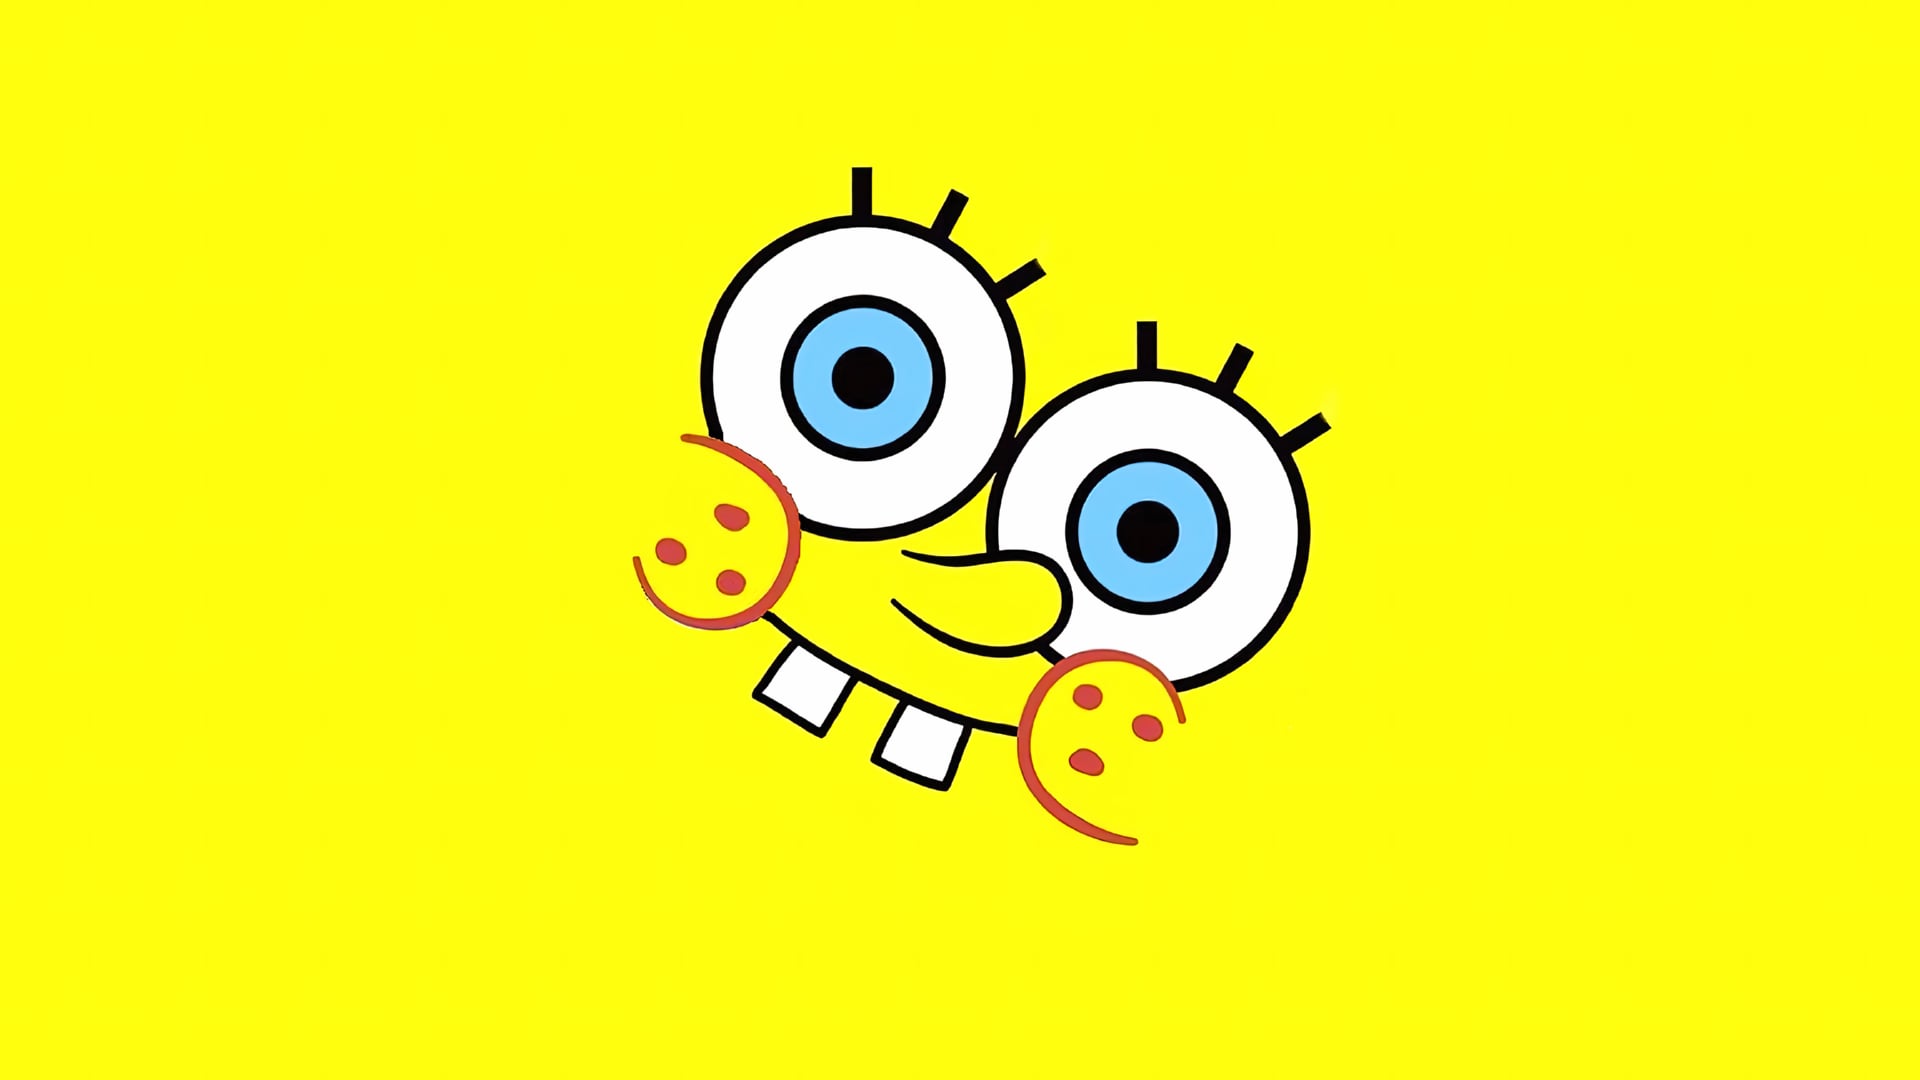 Digital Art SpongeBob SquarePants at 320 x 480 iPhone size wallpapers HD quality